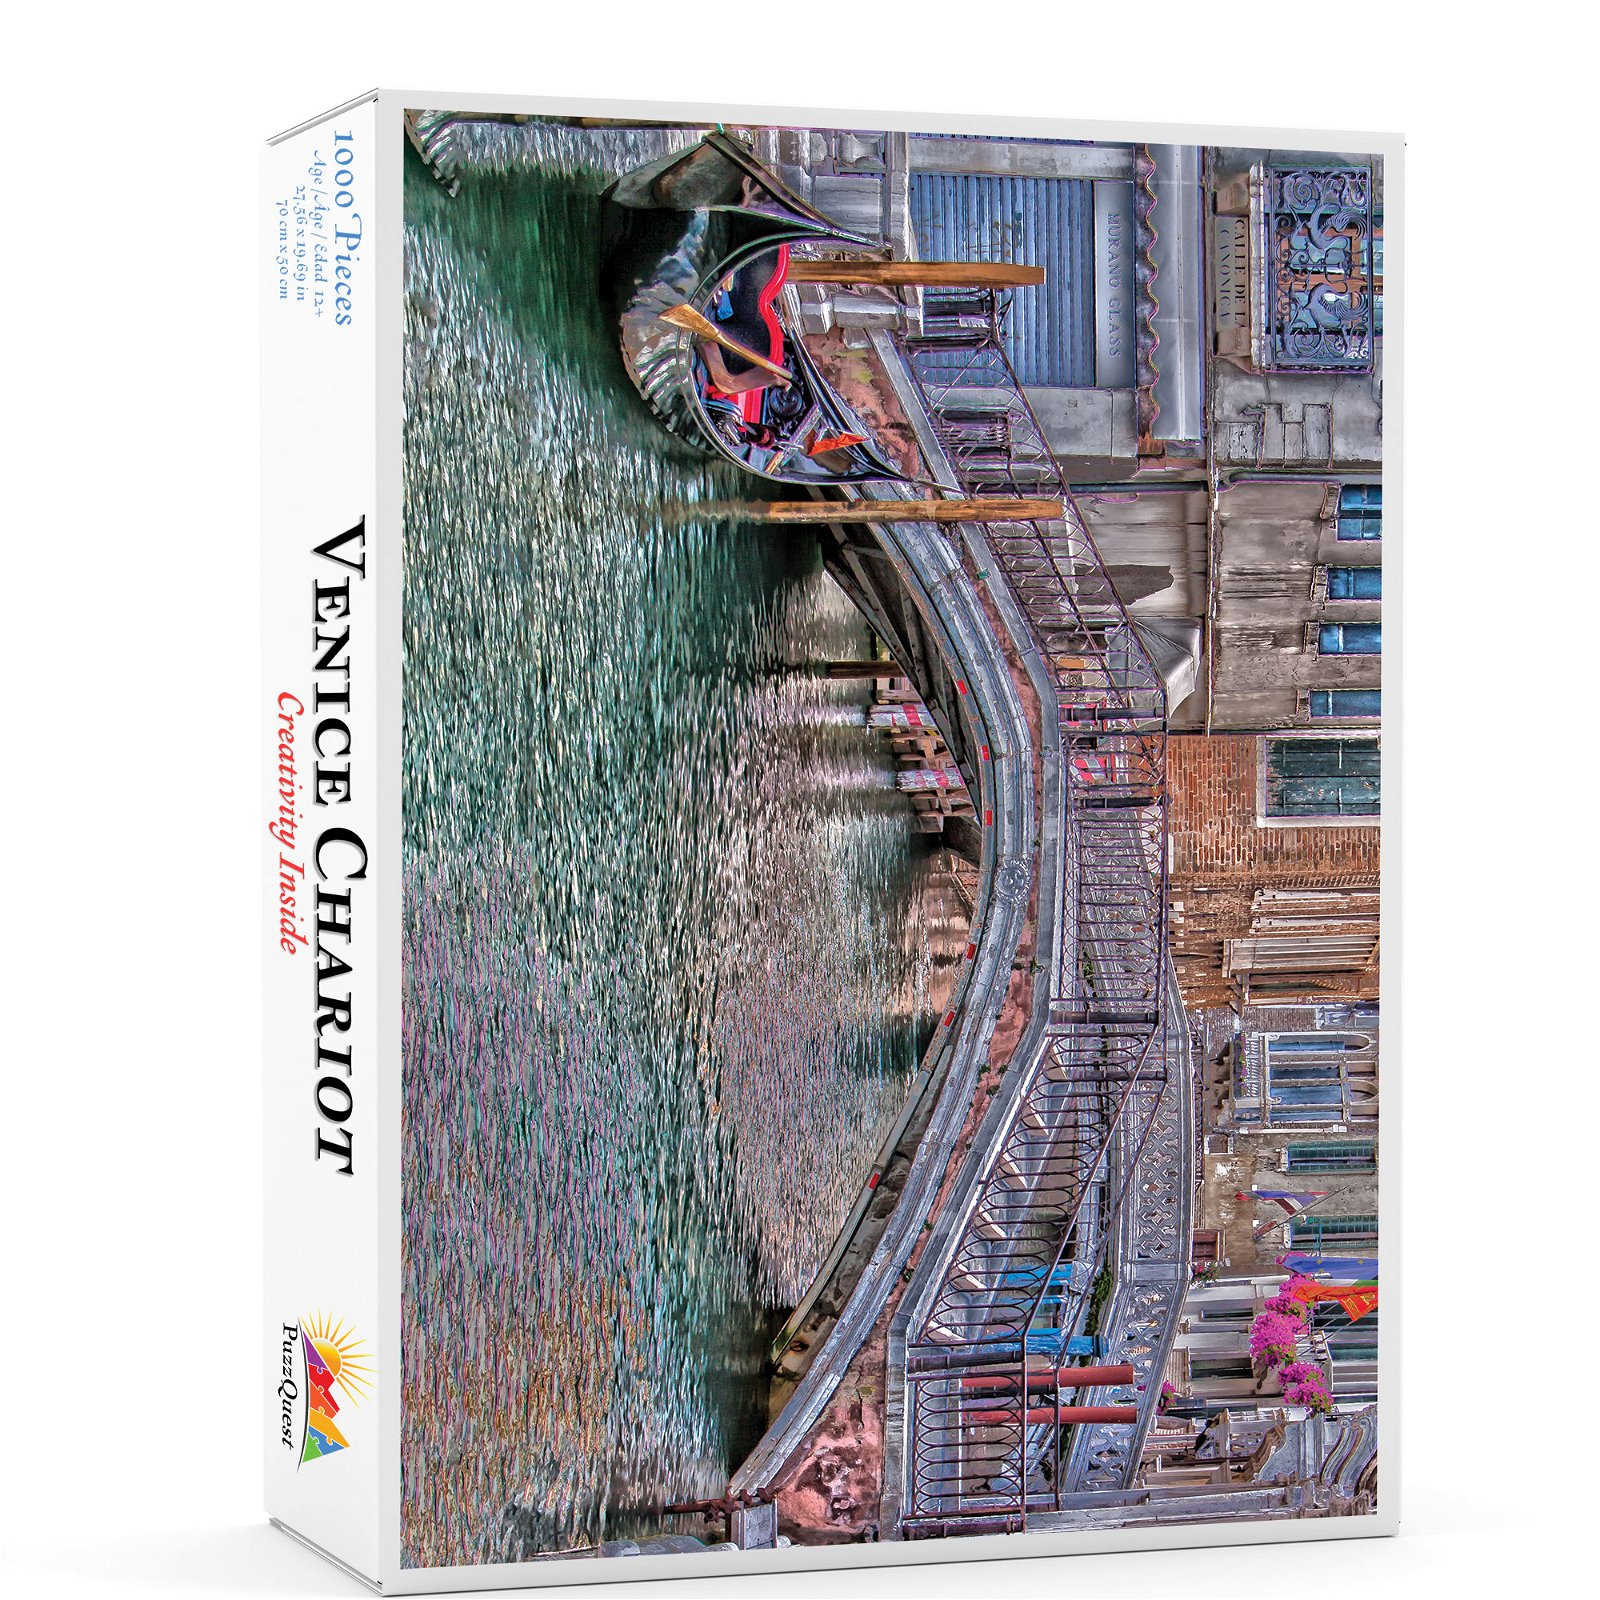 Venice Chariot Puzzle